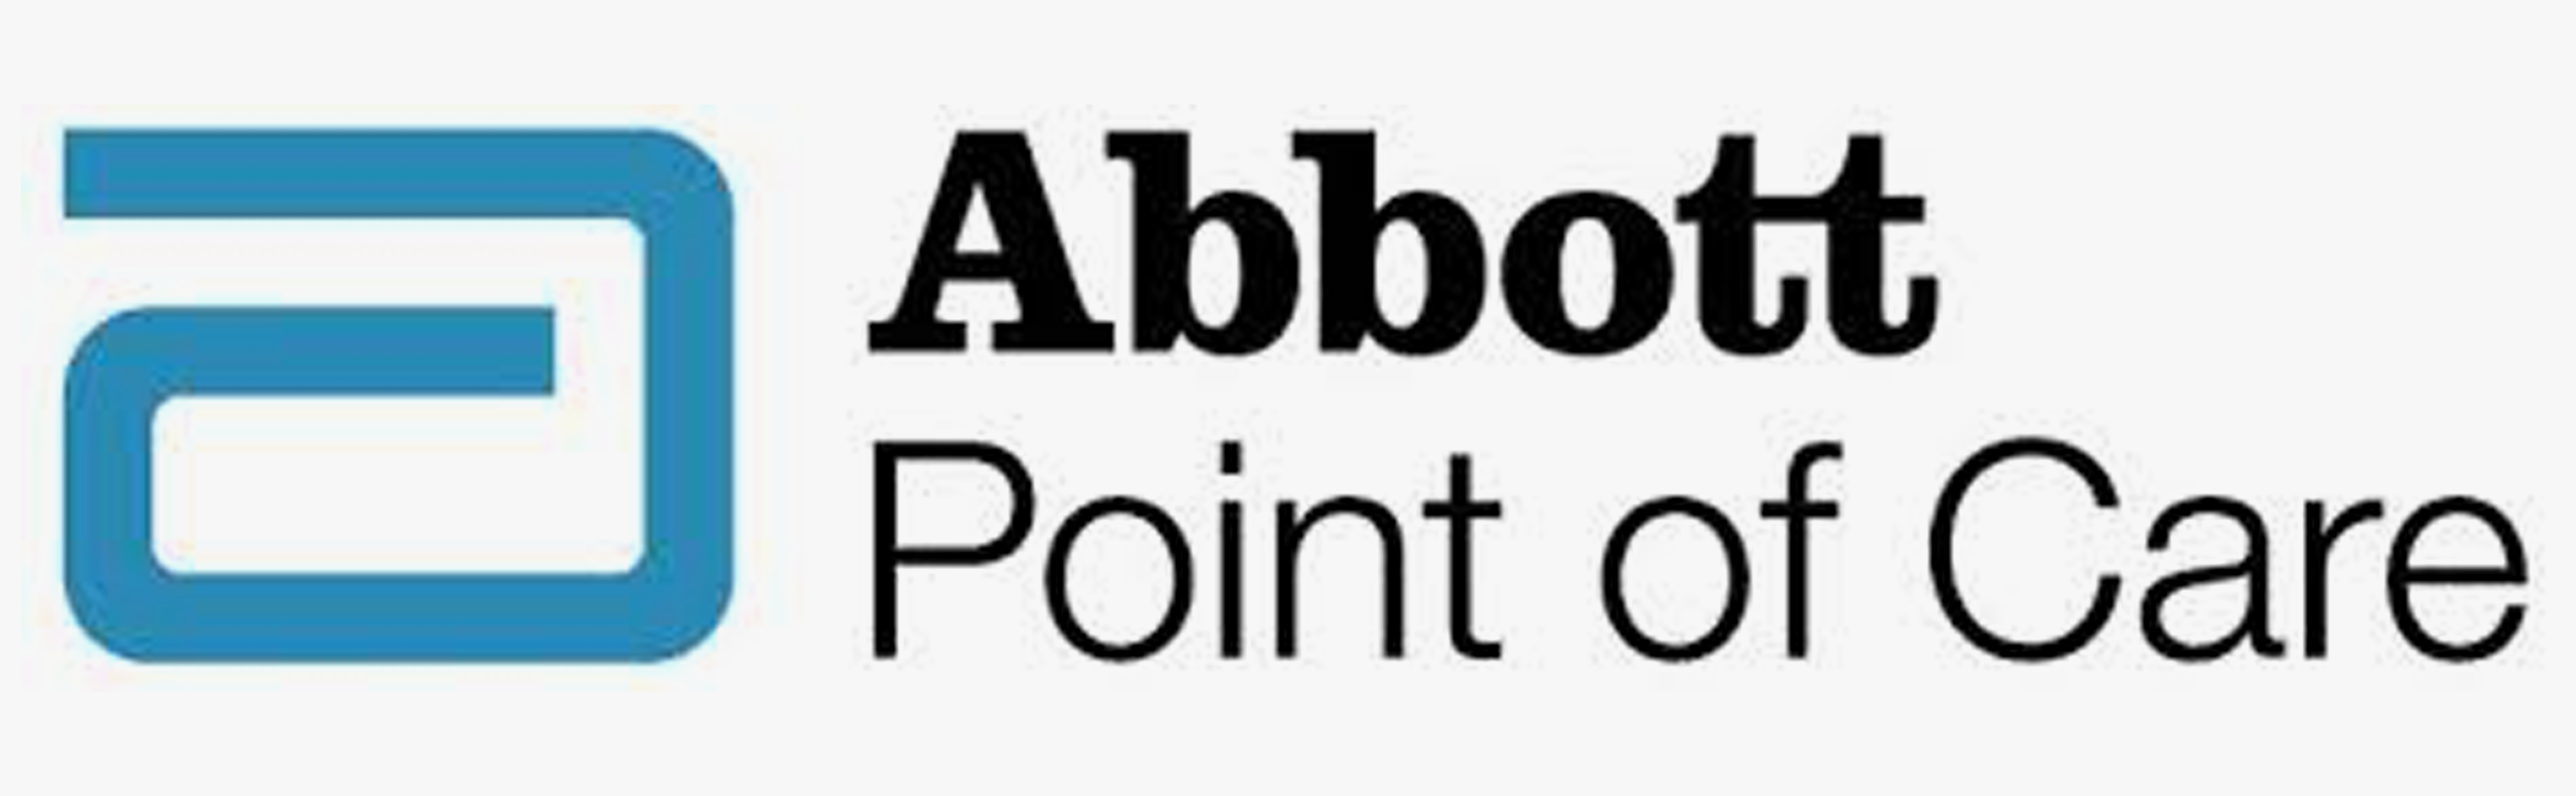  Abbott Point of Care